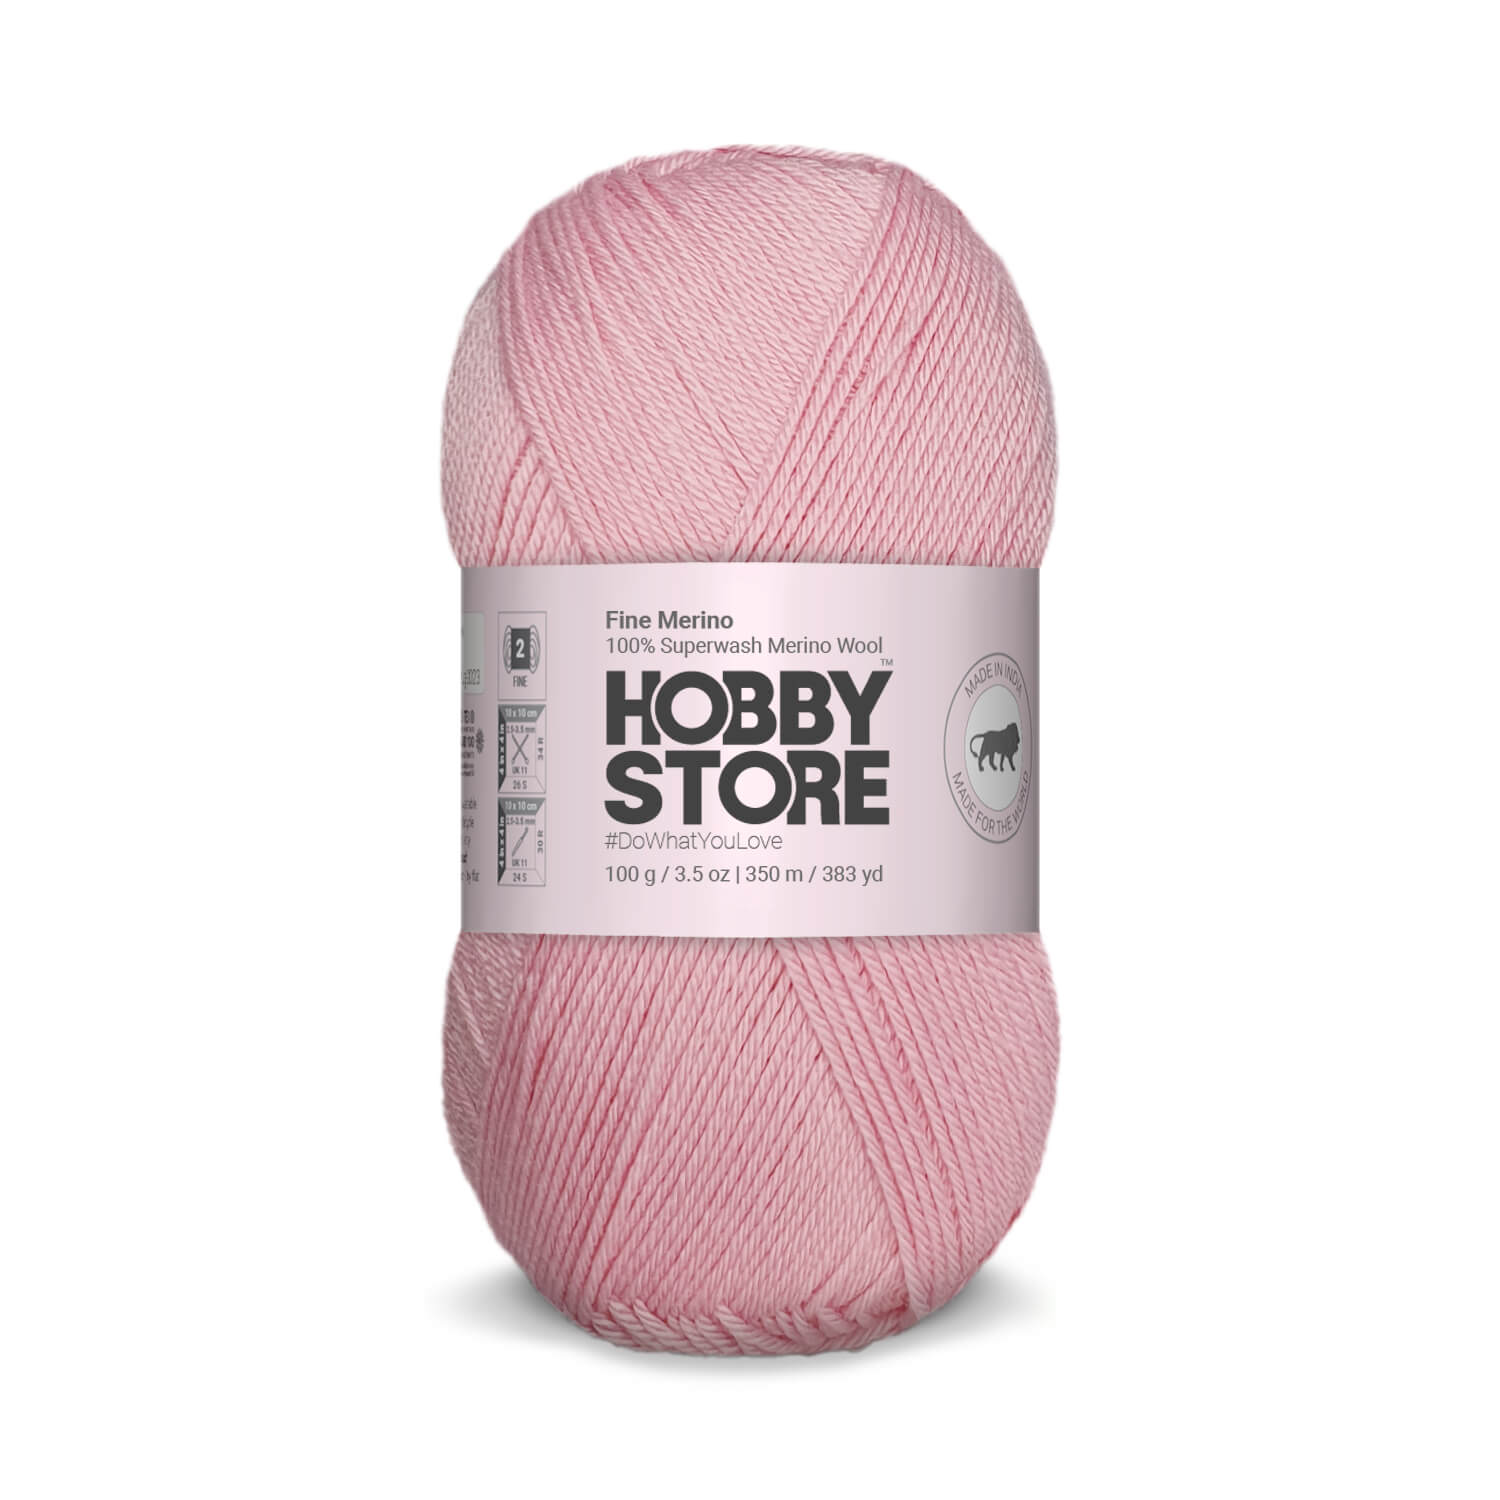 Fine Merino Wool by Hobby Store - Baby Pink FM026